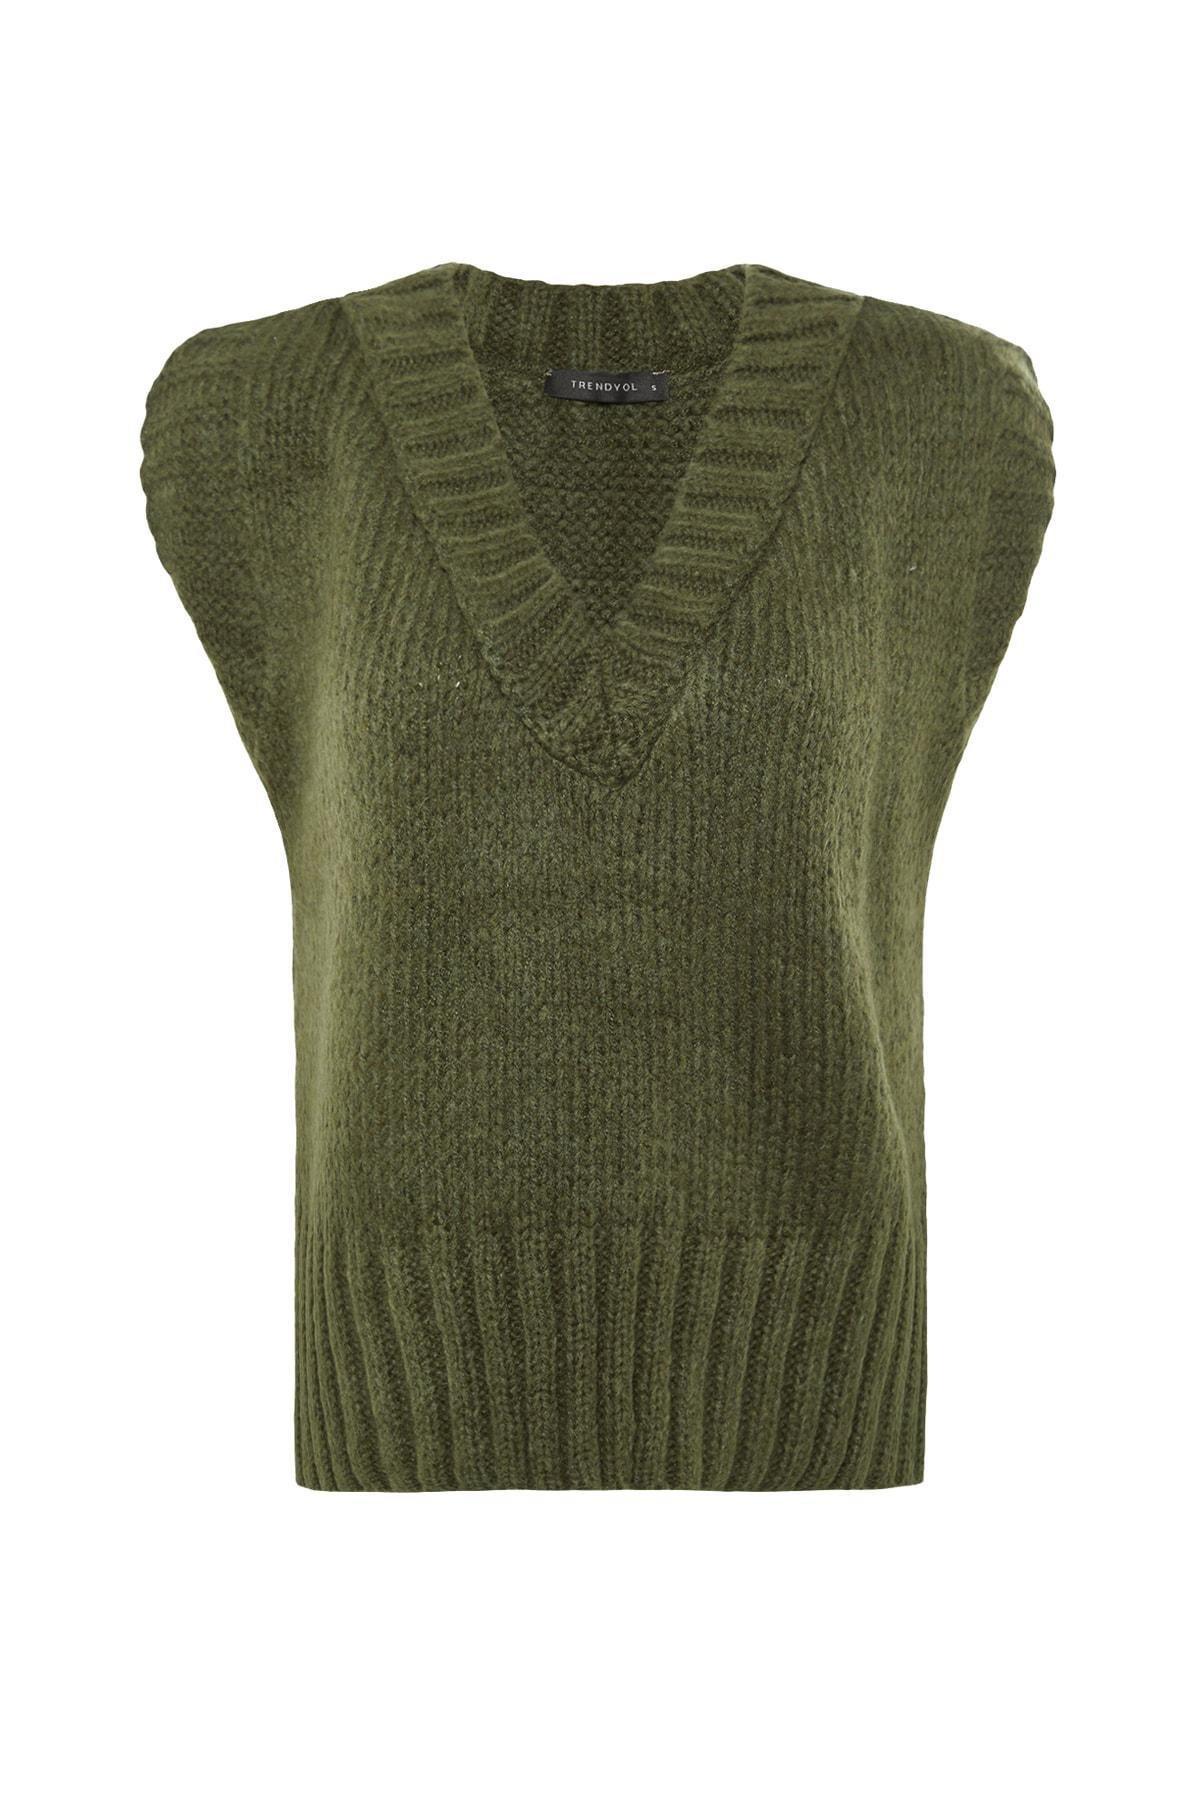 Trendyol - Khaki Knitted Sweater